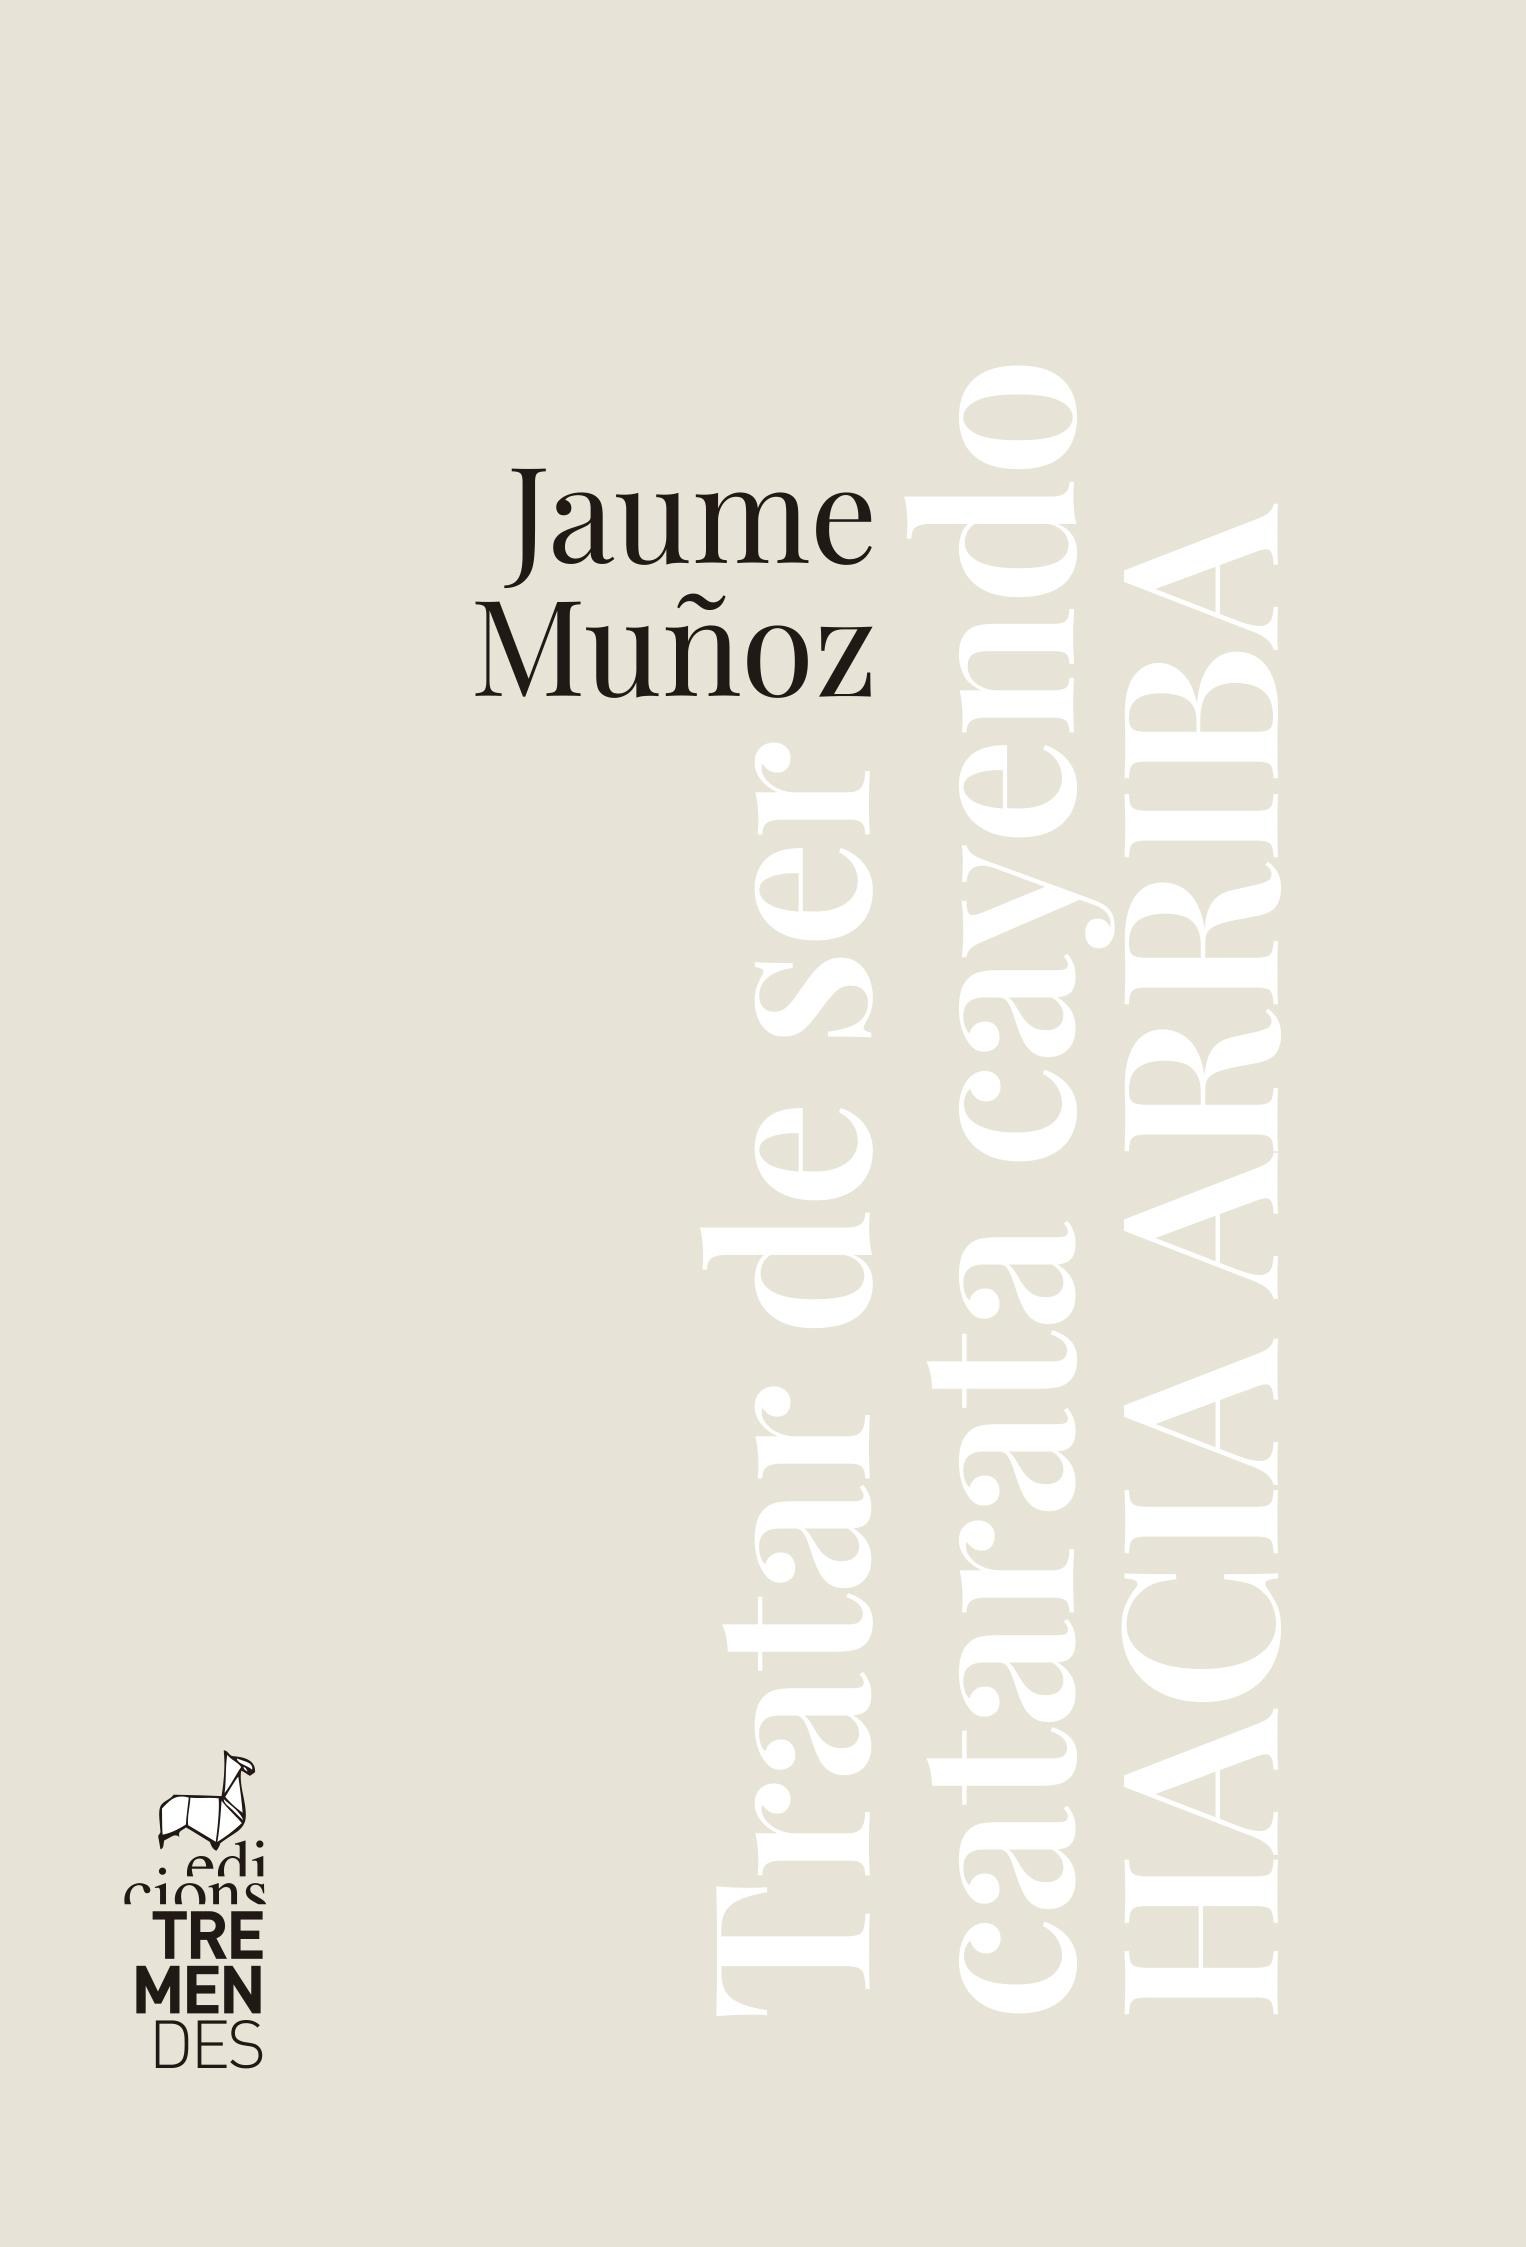 TRATAR DE SER CATARATA CAYENDO HACIA ARRIBA - Jaume Muñoz